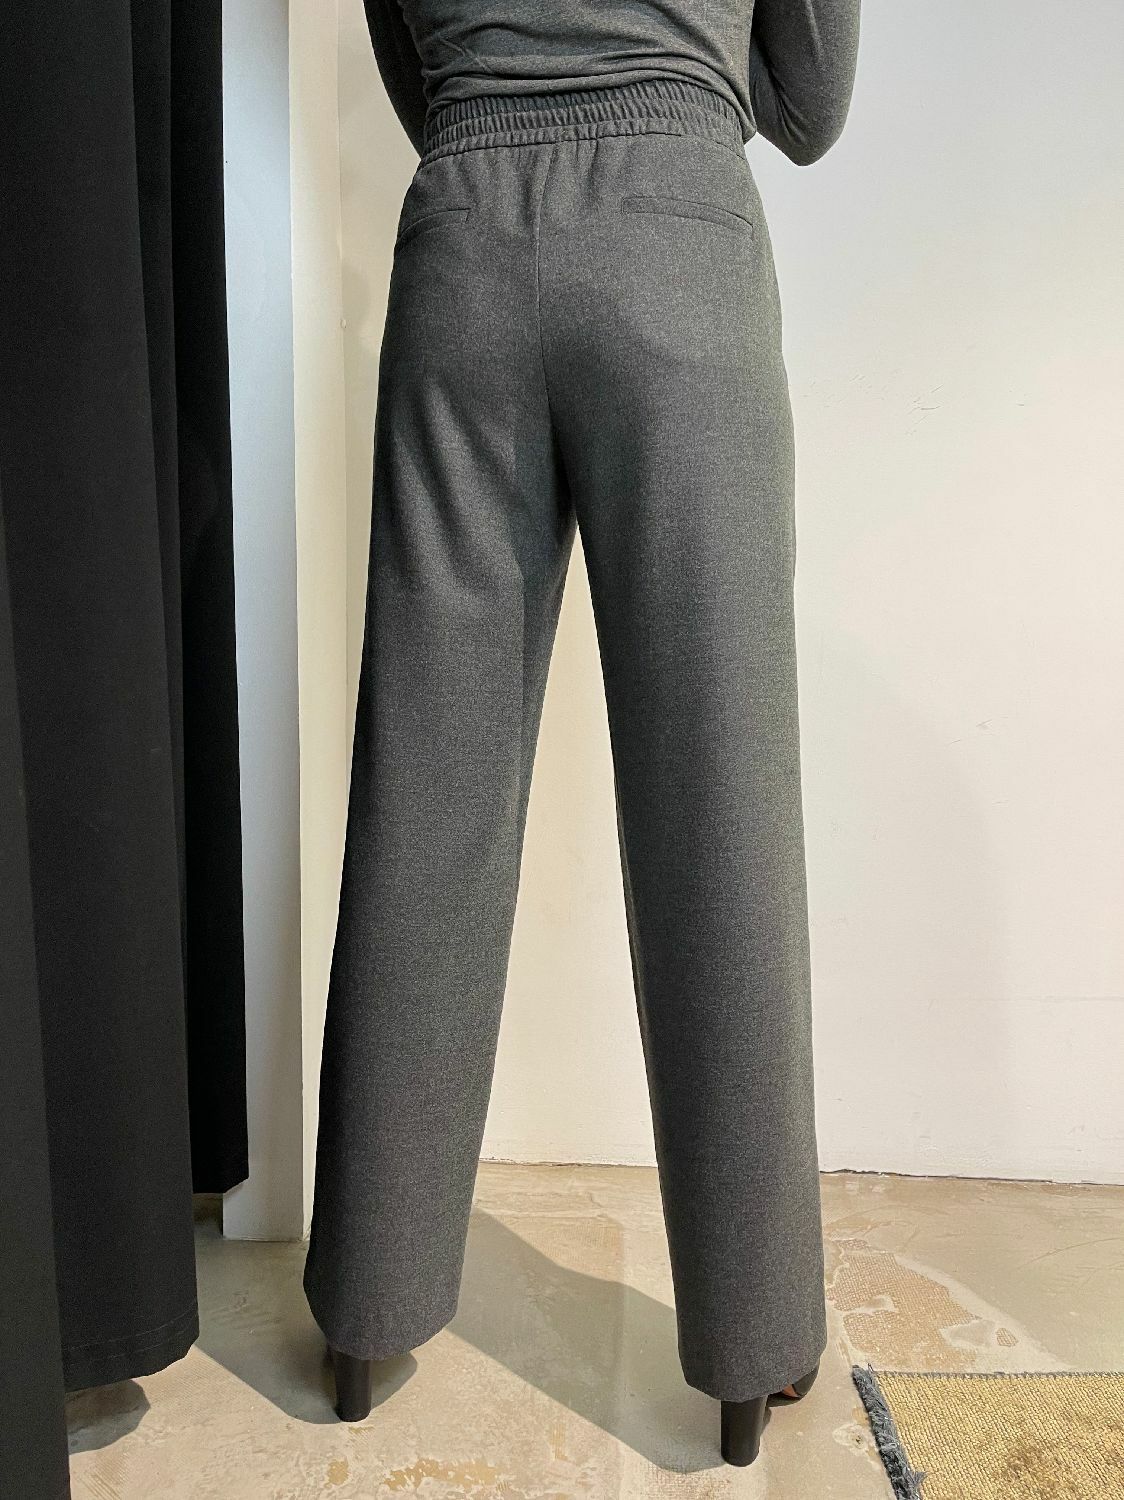 oneerlijk adviseren werk Set dames pantalon 74060 grijs mele online kopen bij No Sense. 74060-9849 |  Where jeans meet fashion